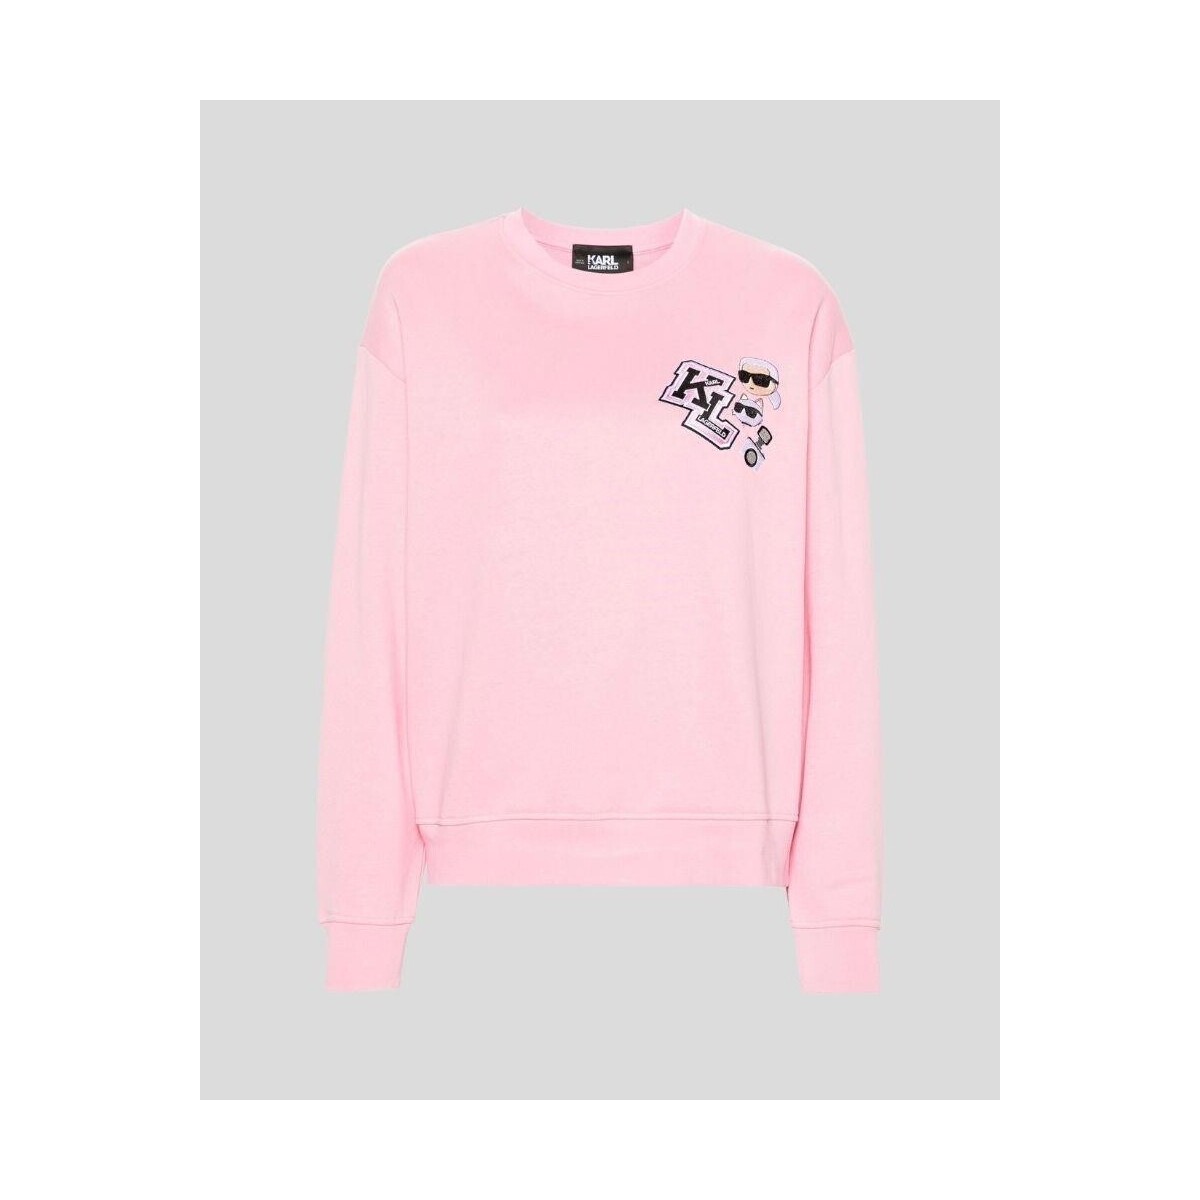 Kleidung Damen Sweatshirts Karl Lagerfeld 240W1812 VARSITY KL SWEATSHIRT Rosa